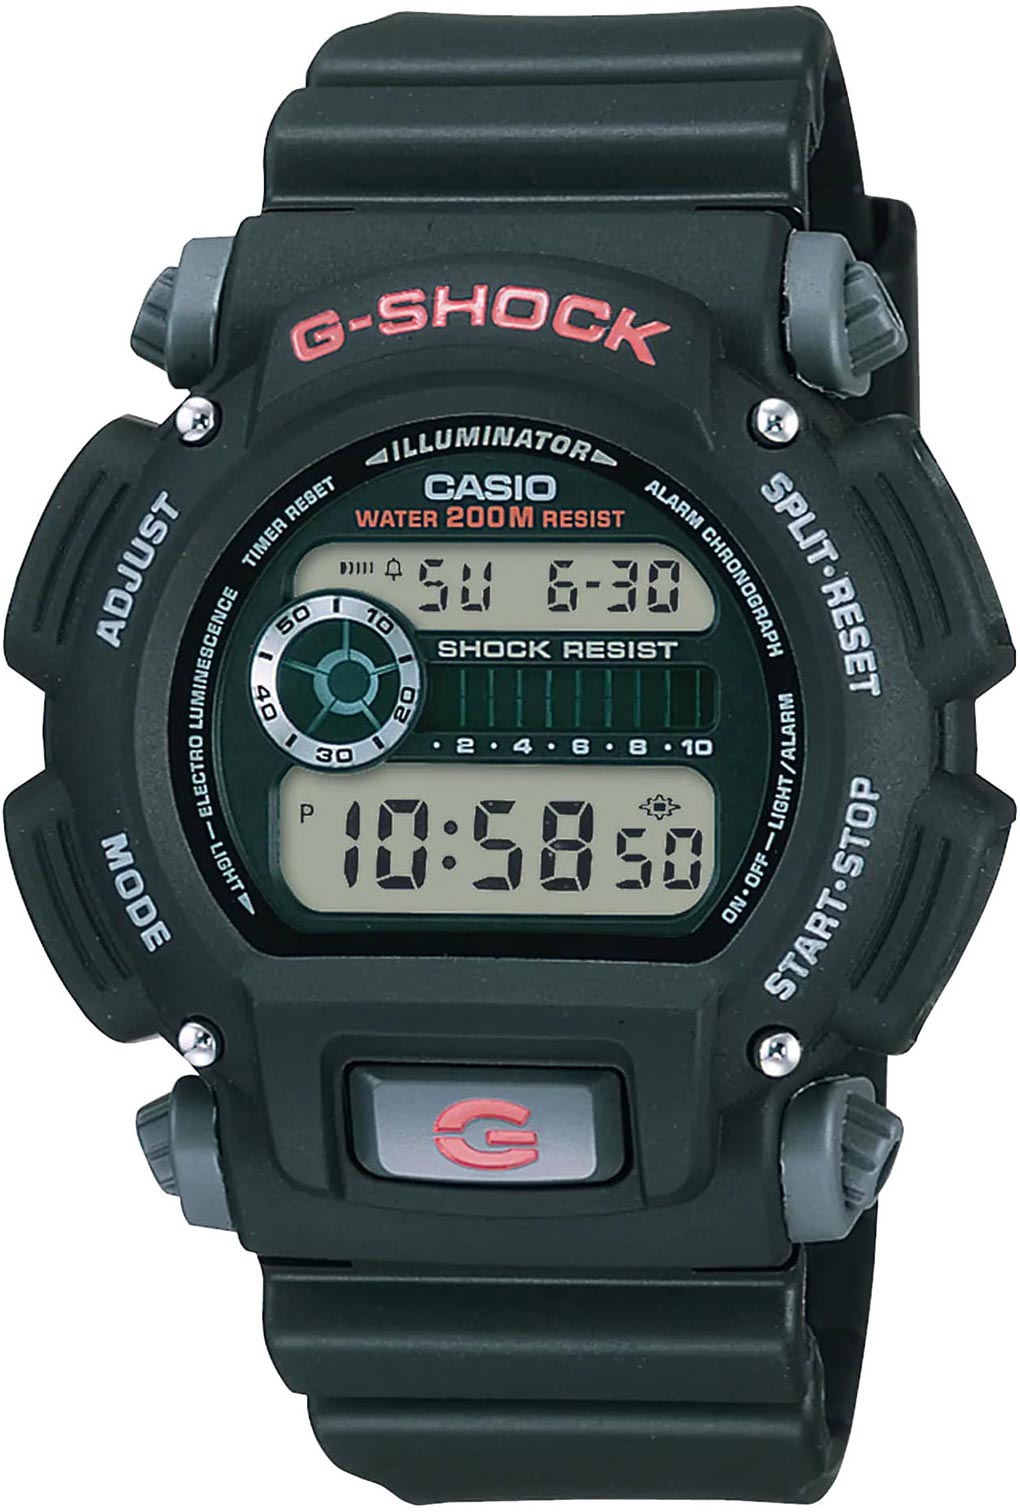    Casio G-SHOCK DW-9052-1V